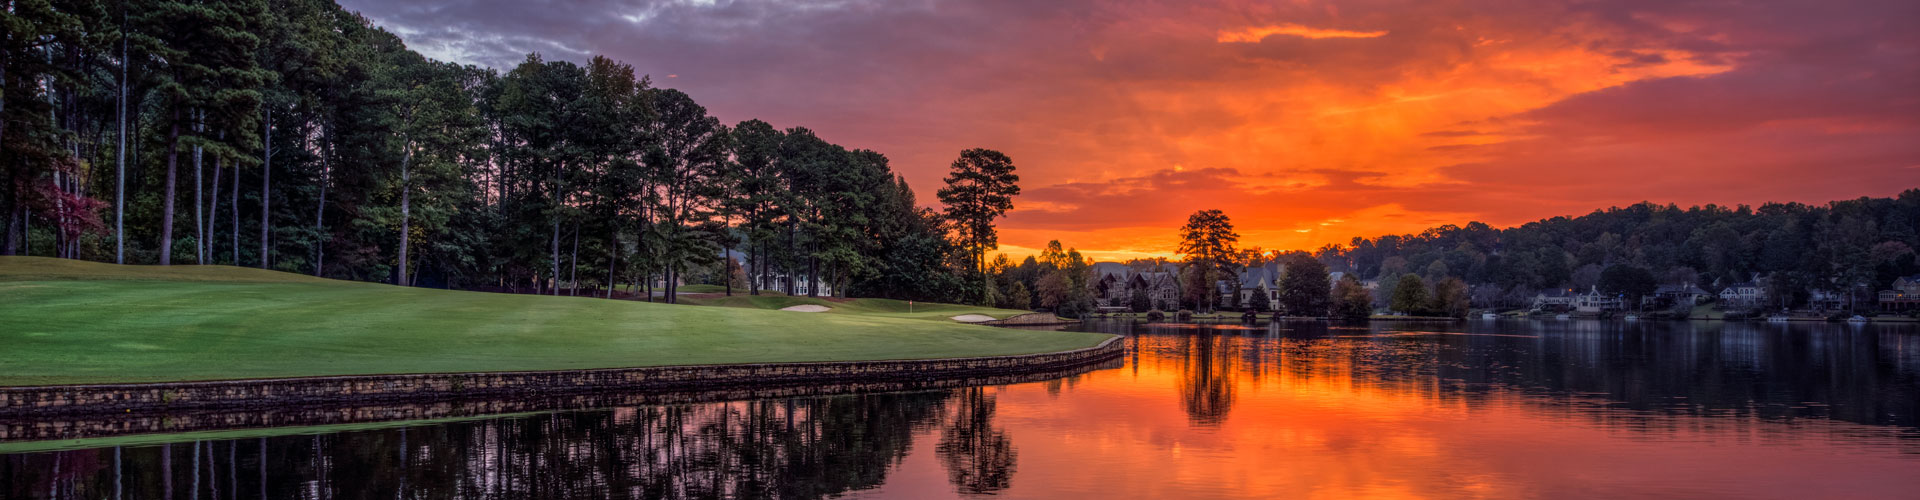 Beautiful Sunset over Golf Course